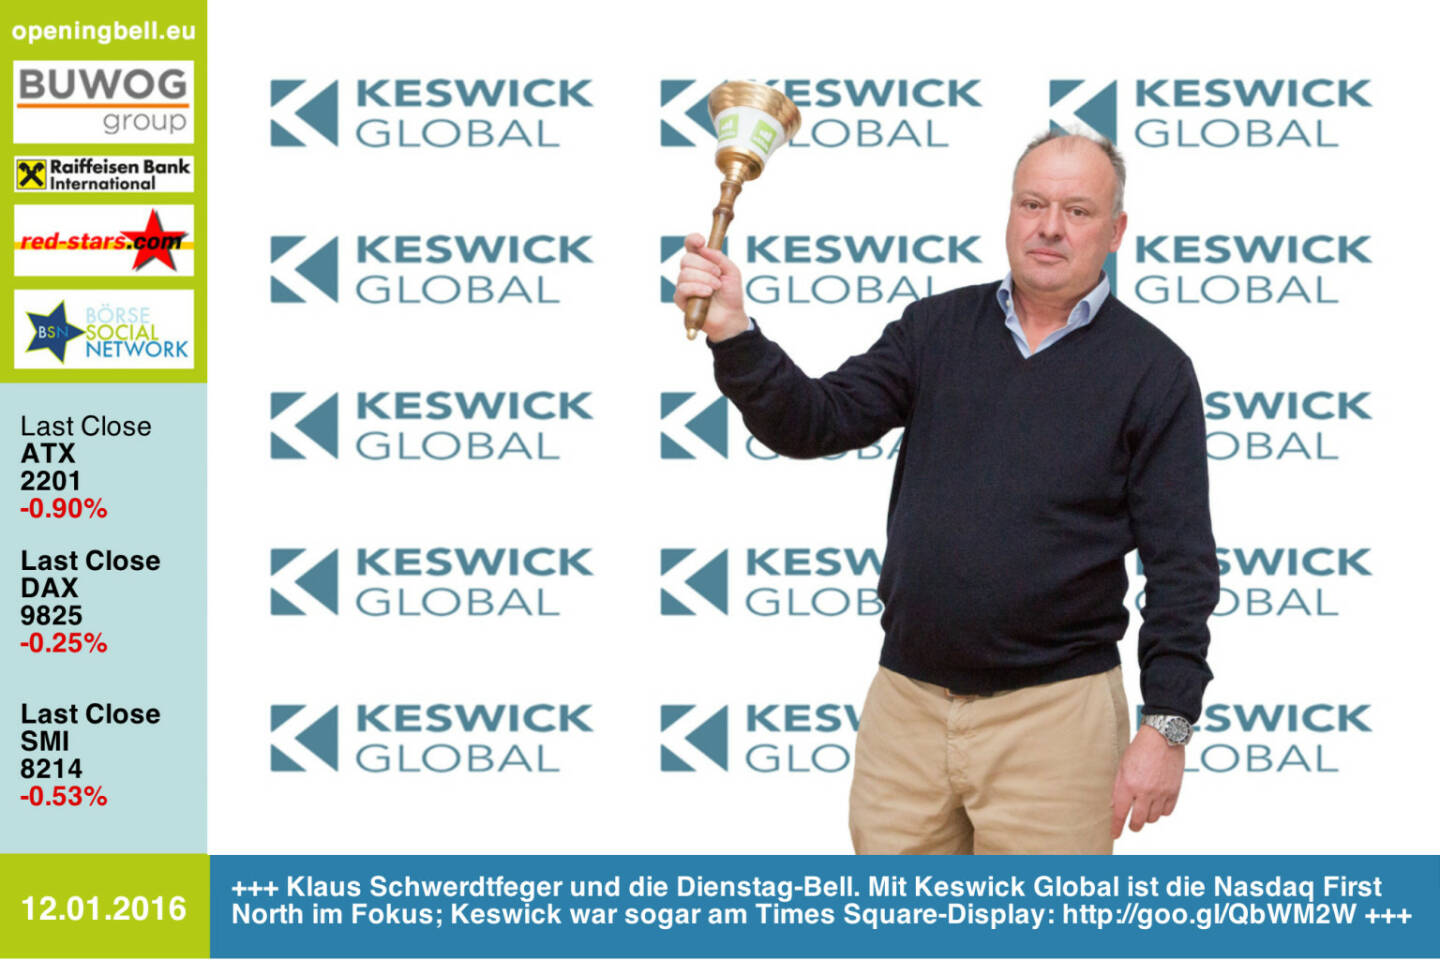 #openingbell am 12.1.: Klaus Schwerdtfeger und die Dienstag-Bell. Mit Keswick Global ist die Nasdaq First North im Fokus; Keswick war sogar am Times Square-Display: http://goo.gl/QbWM2W http://www.keswickglobal.com http://www.openingbell.eu 
